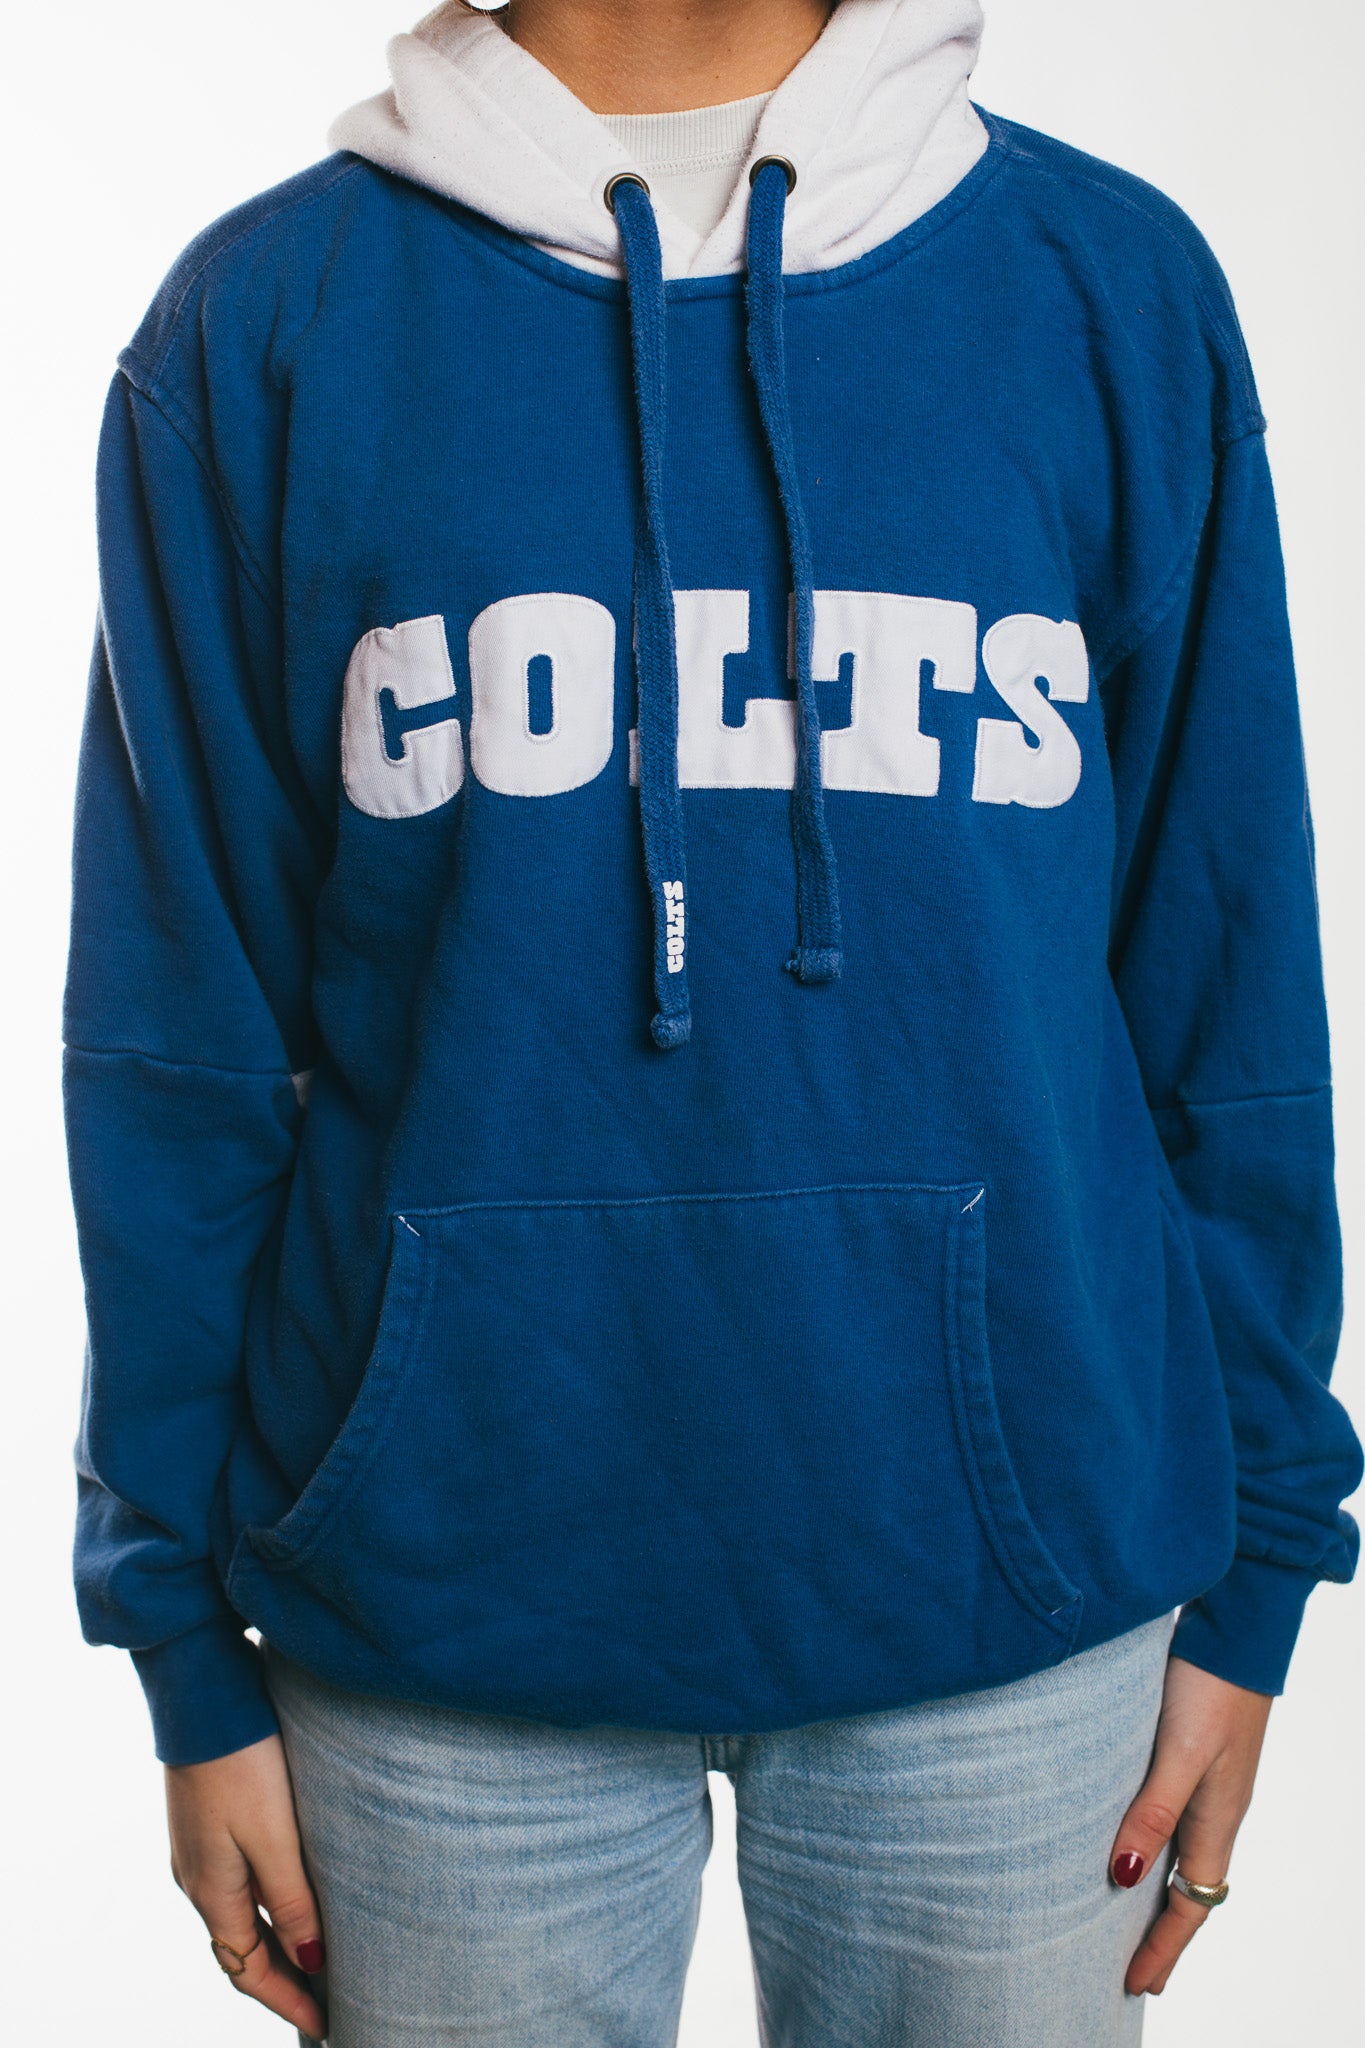 Colts - Hoodie (M)